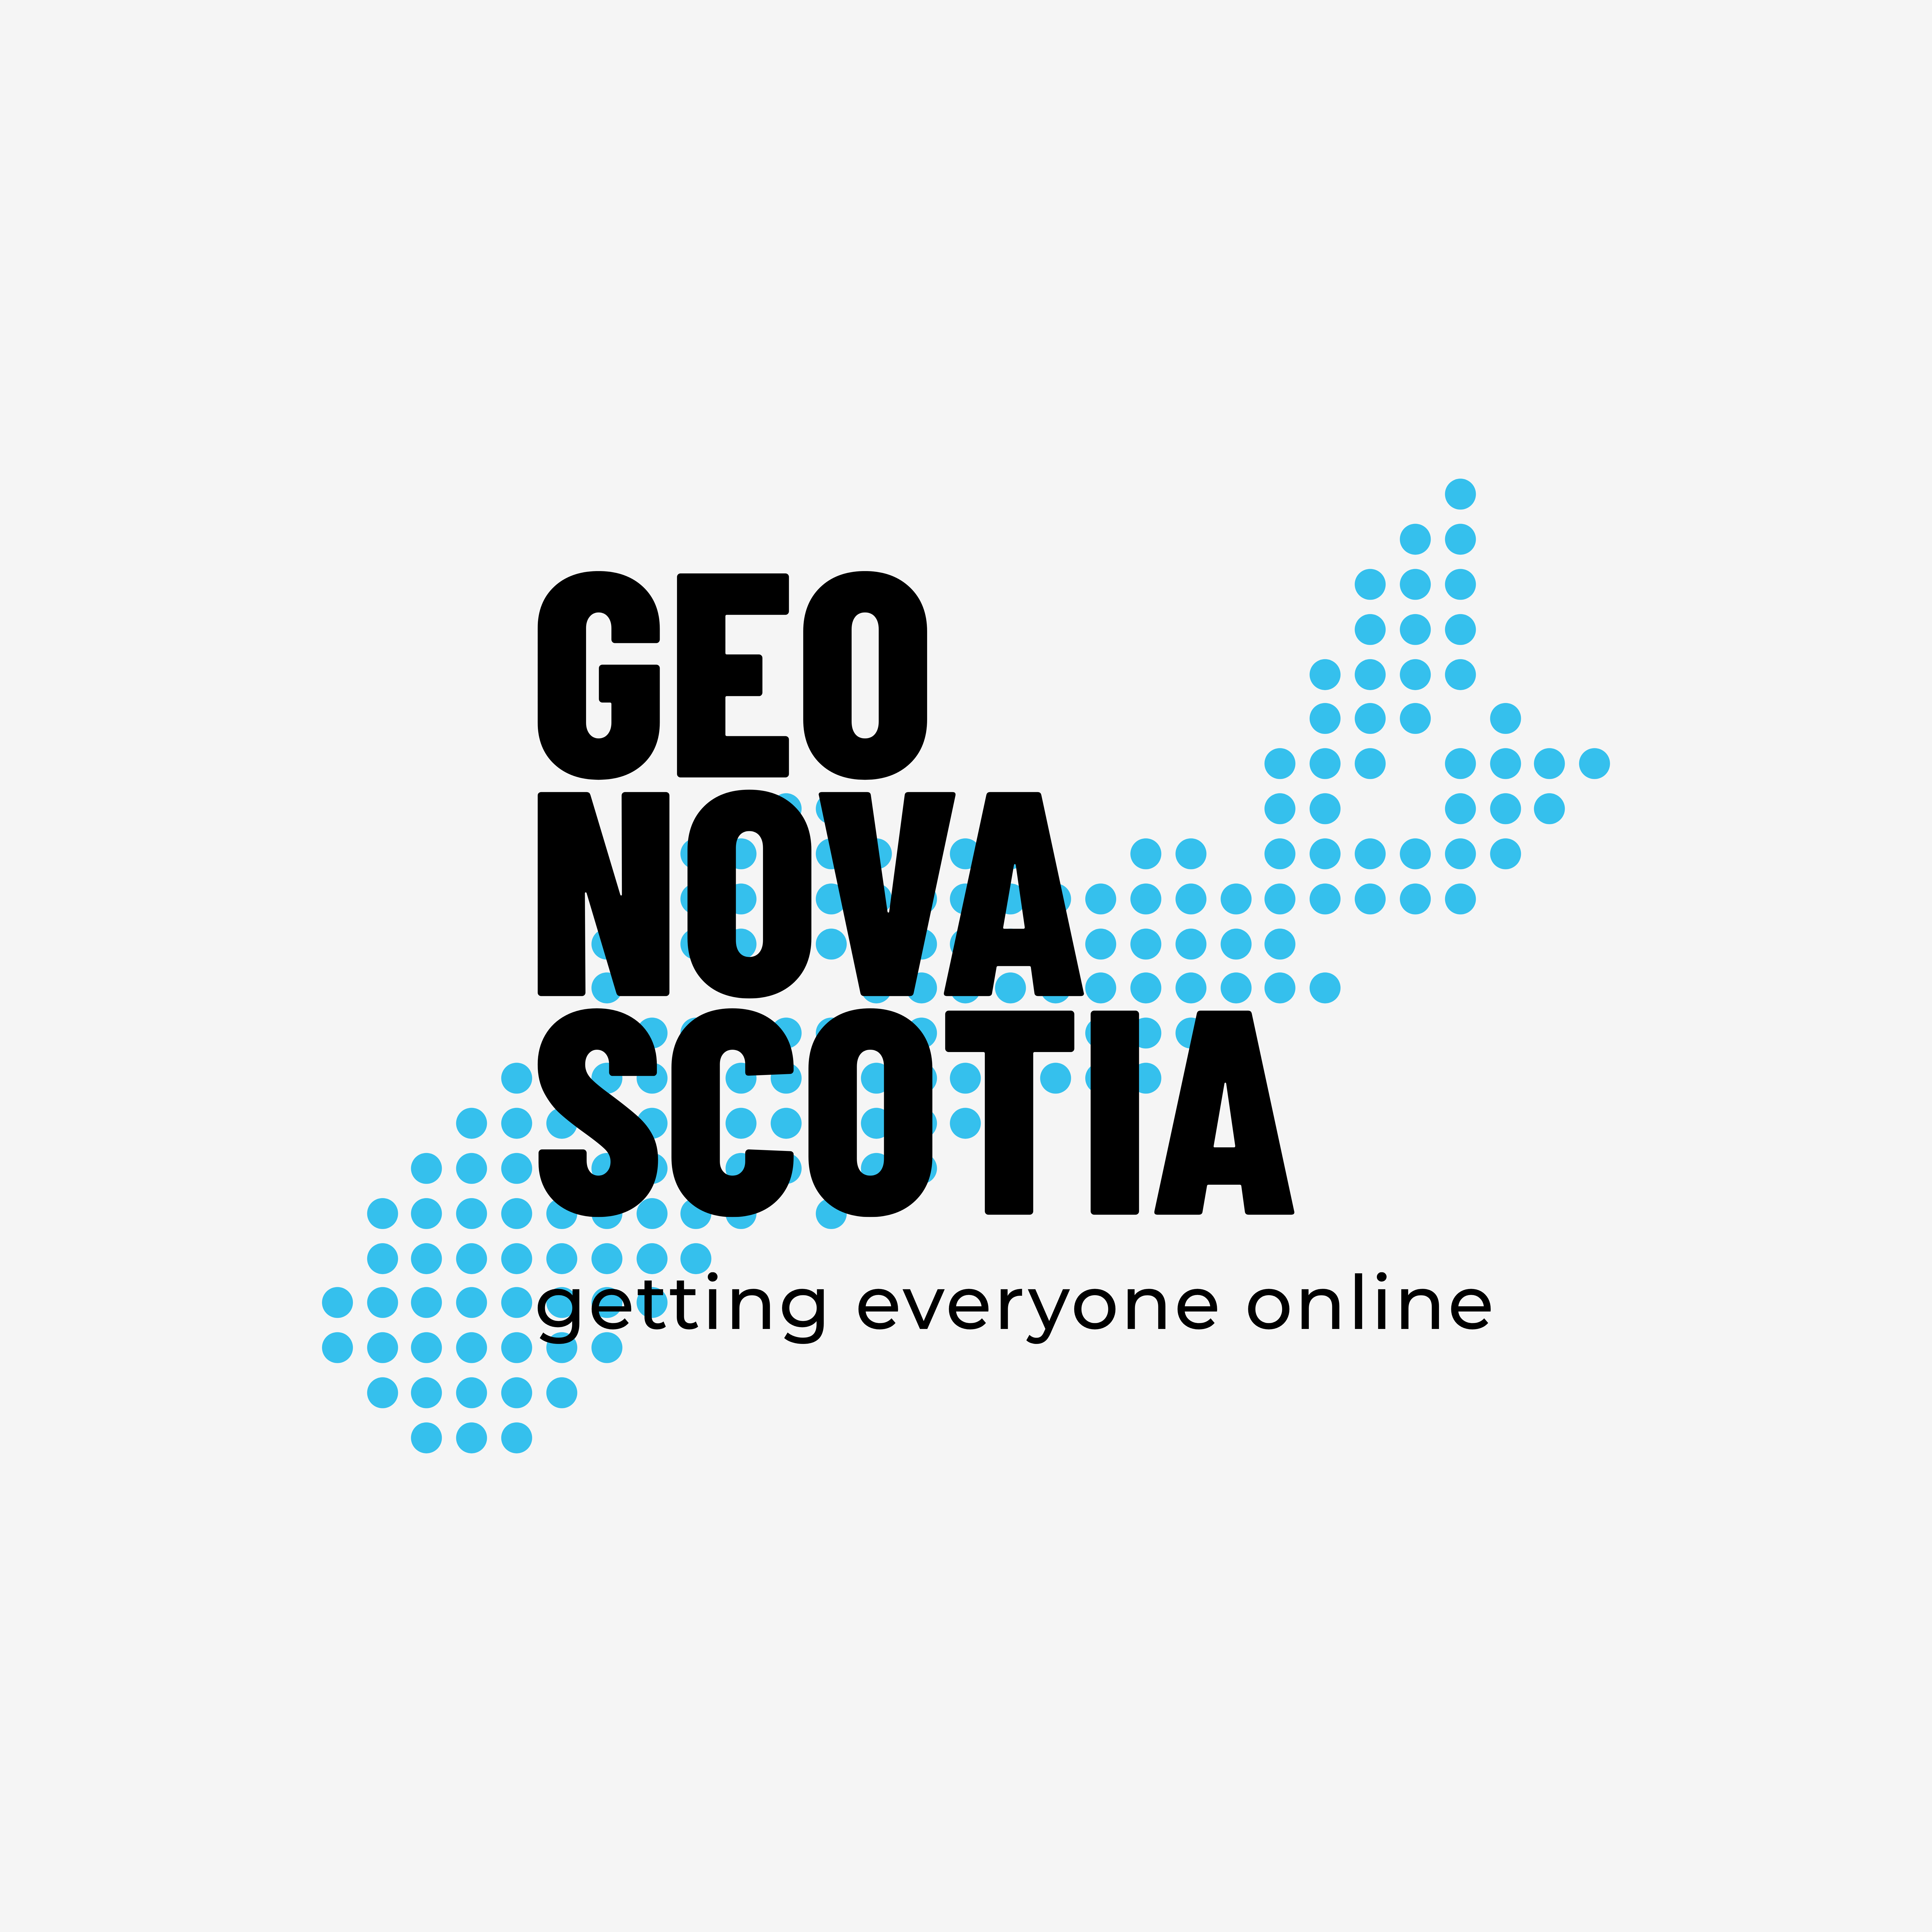 GEO Nova Scotia